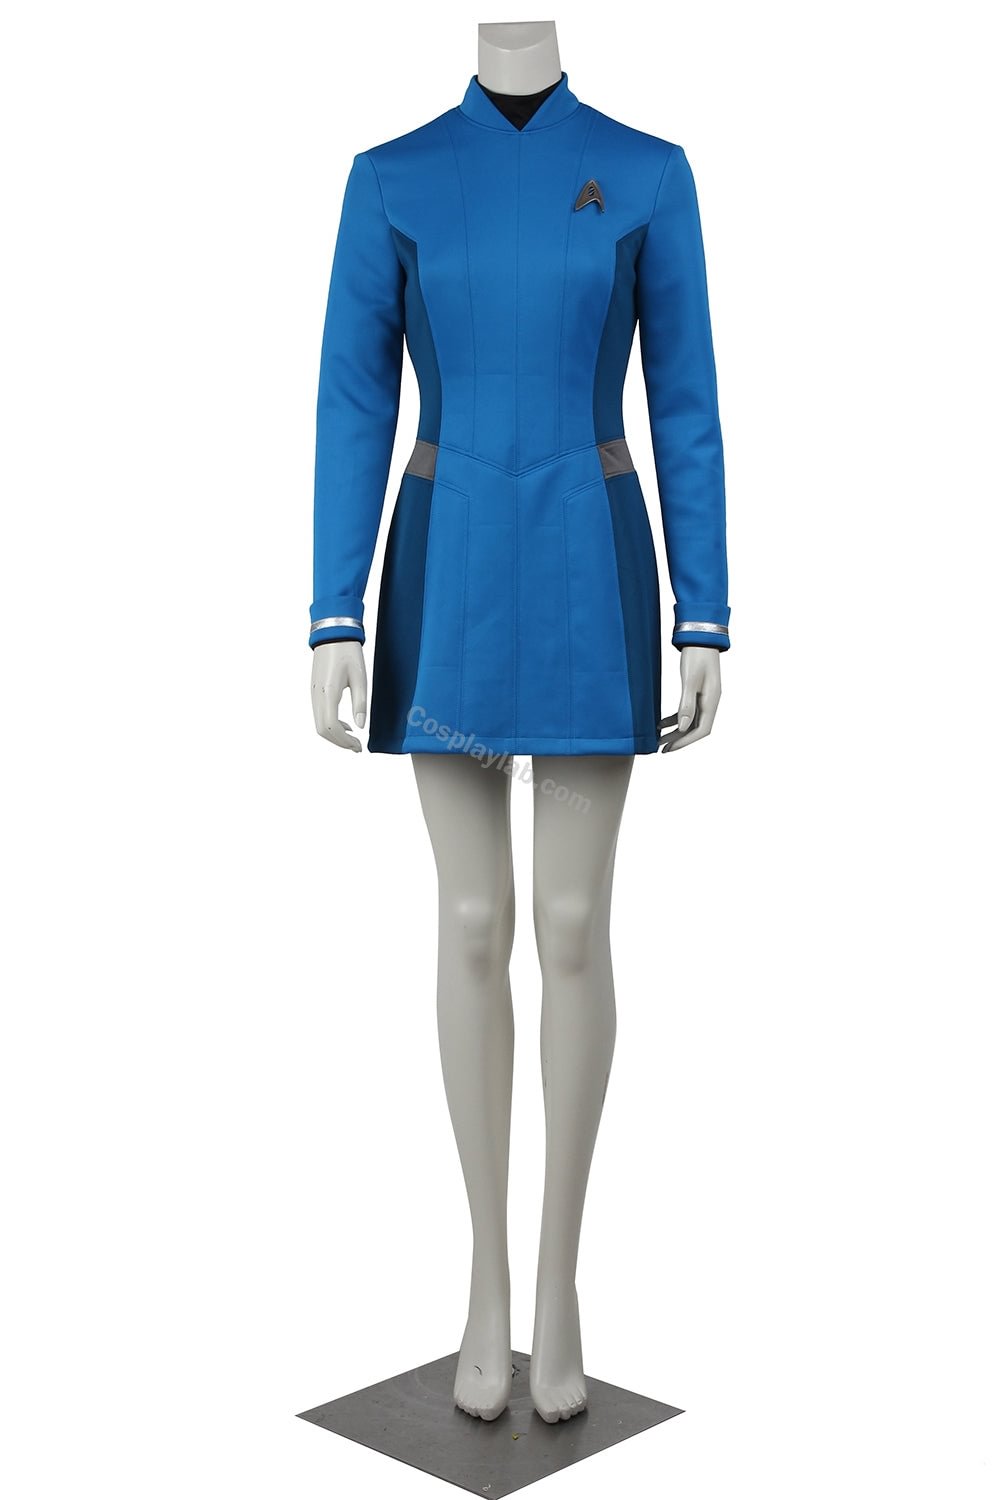 Star Trek Beyond Woman Uhura blue Cosplay Costume Jacket